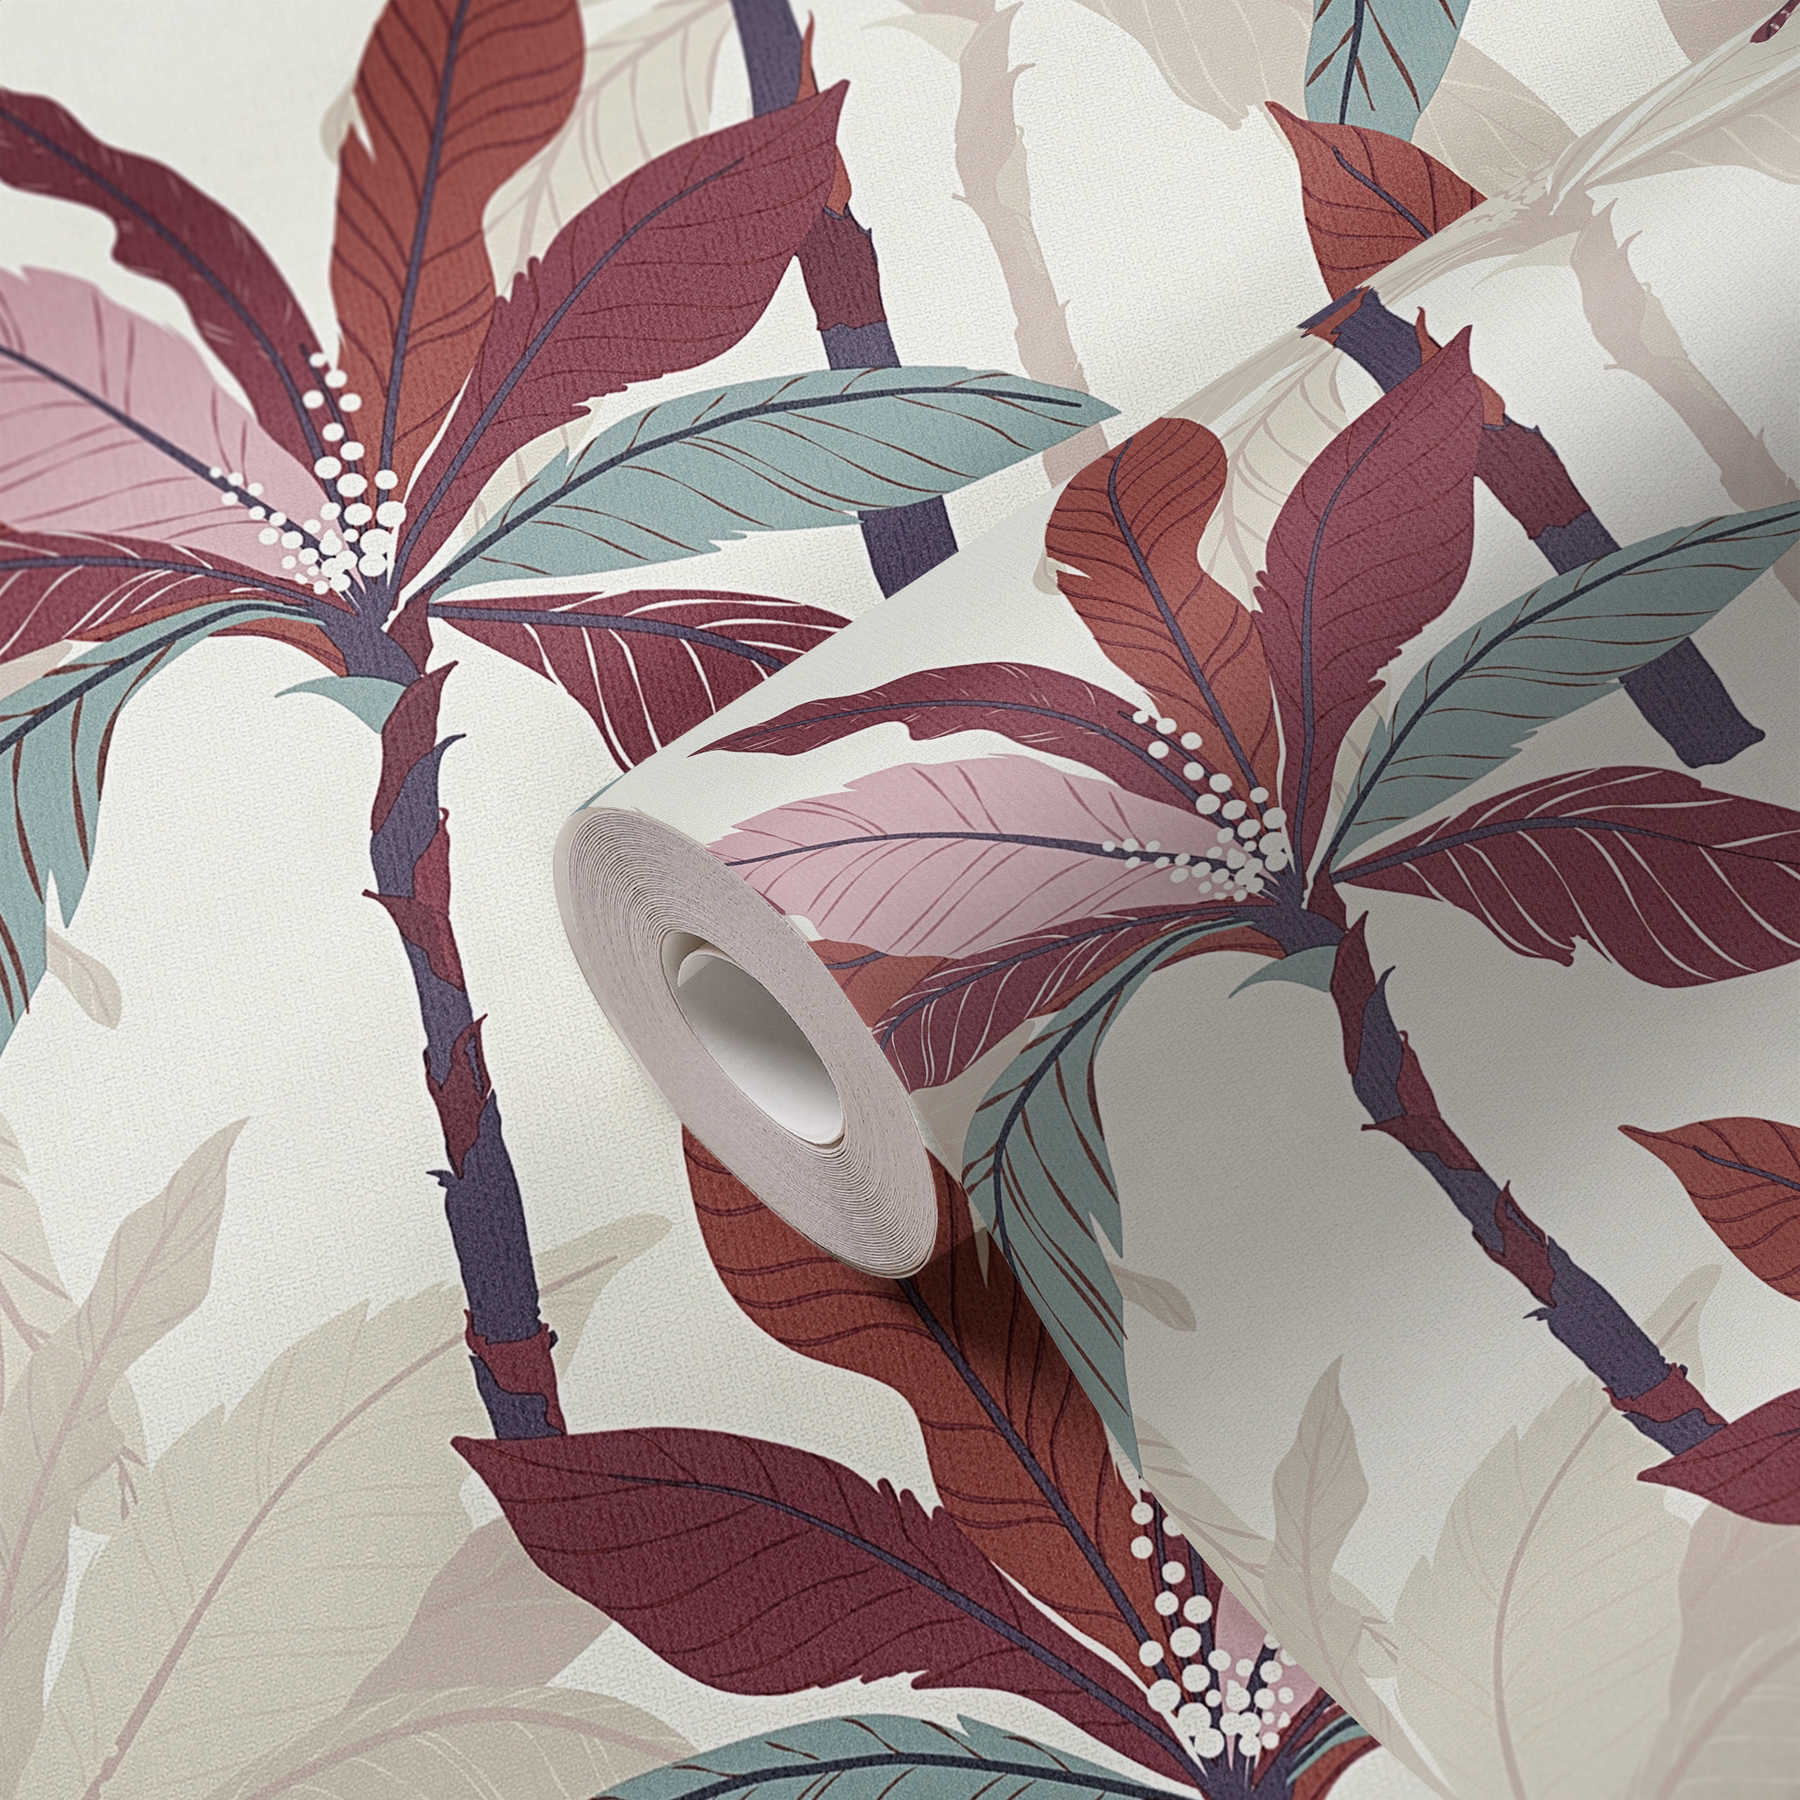             Wallpaper palm tree design, tropical pattern - red, beige, cream
        